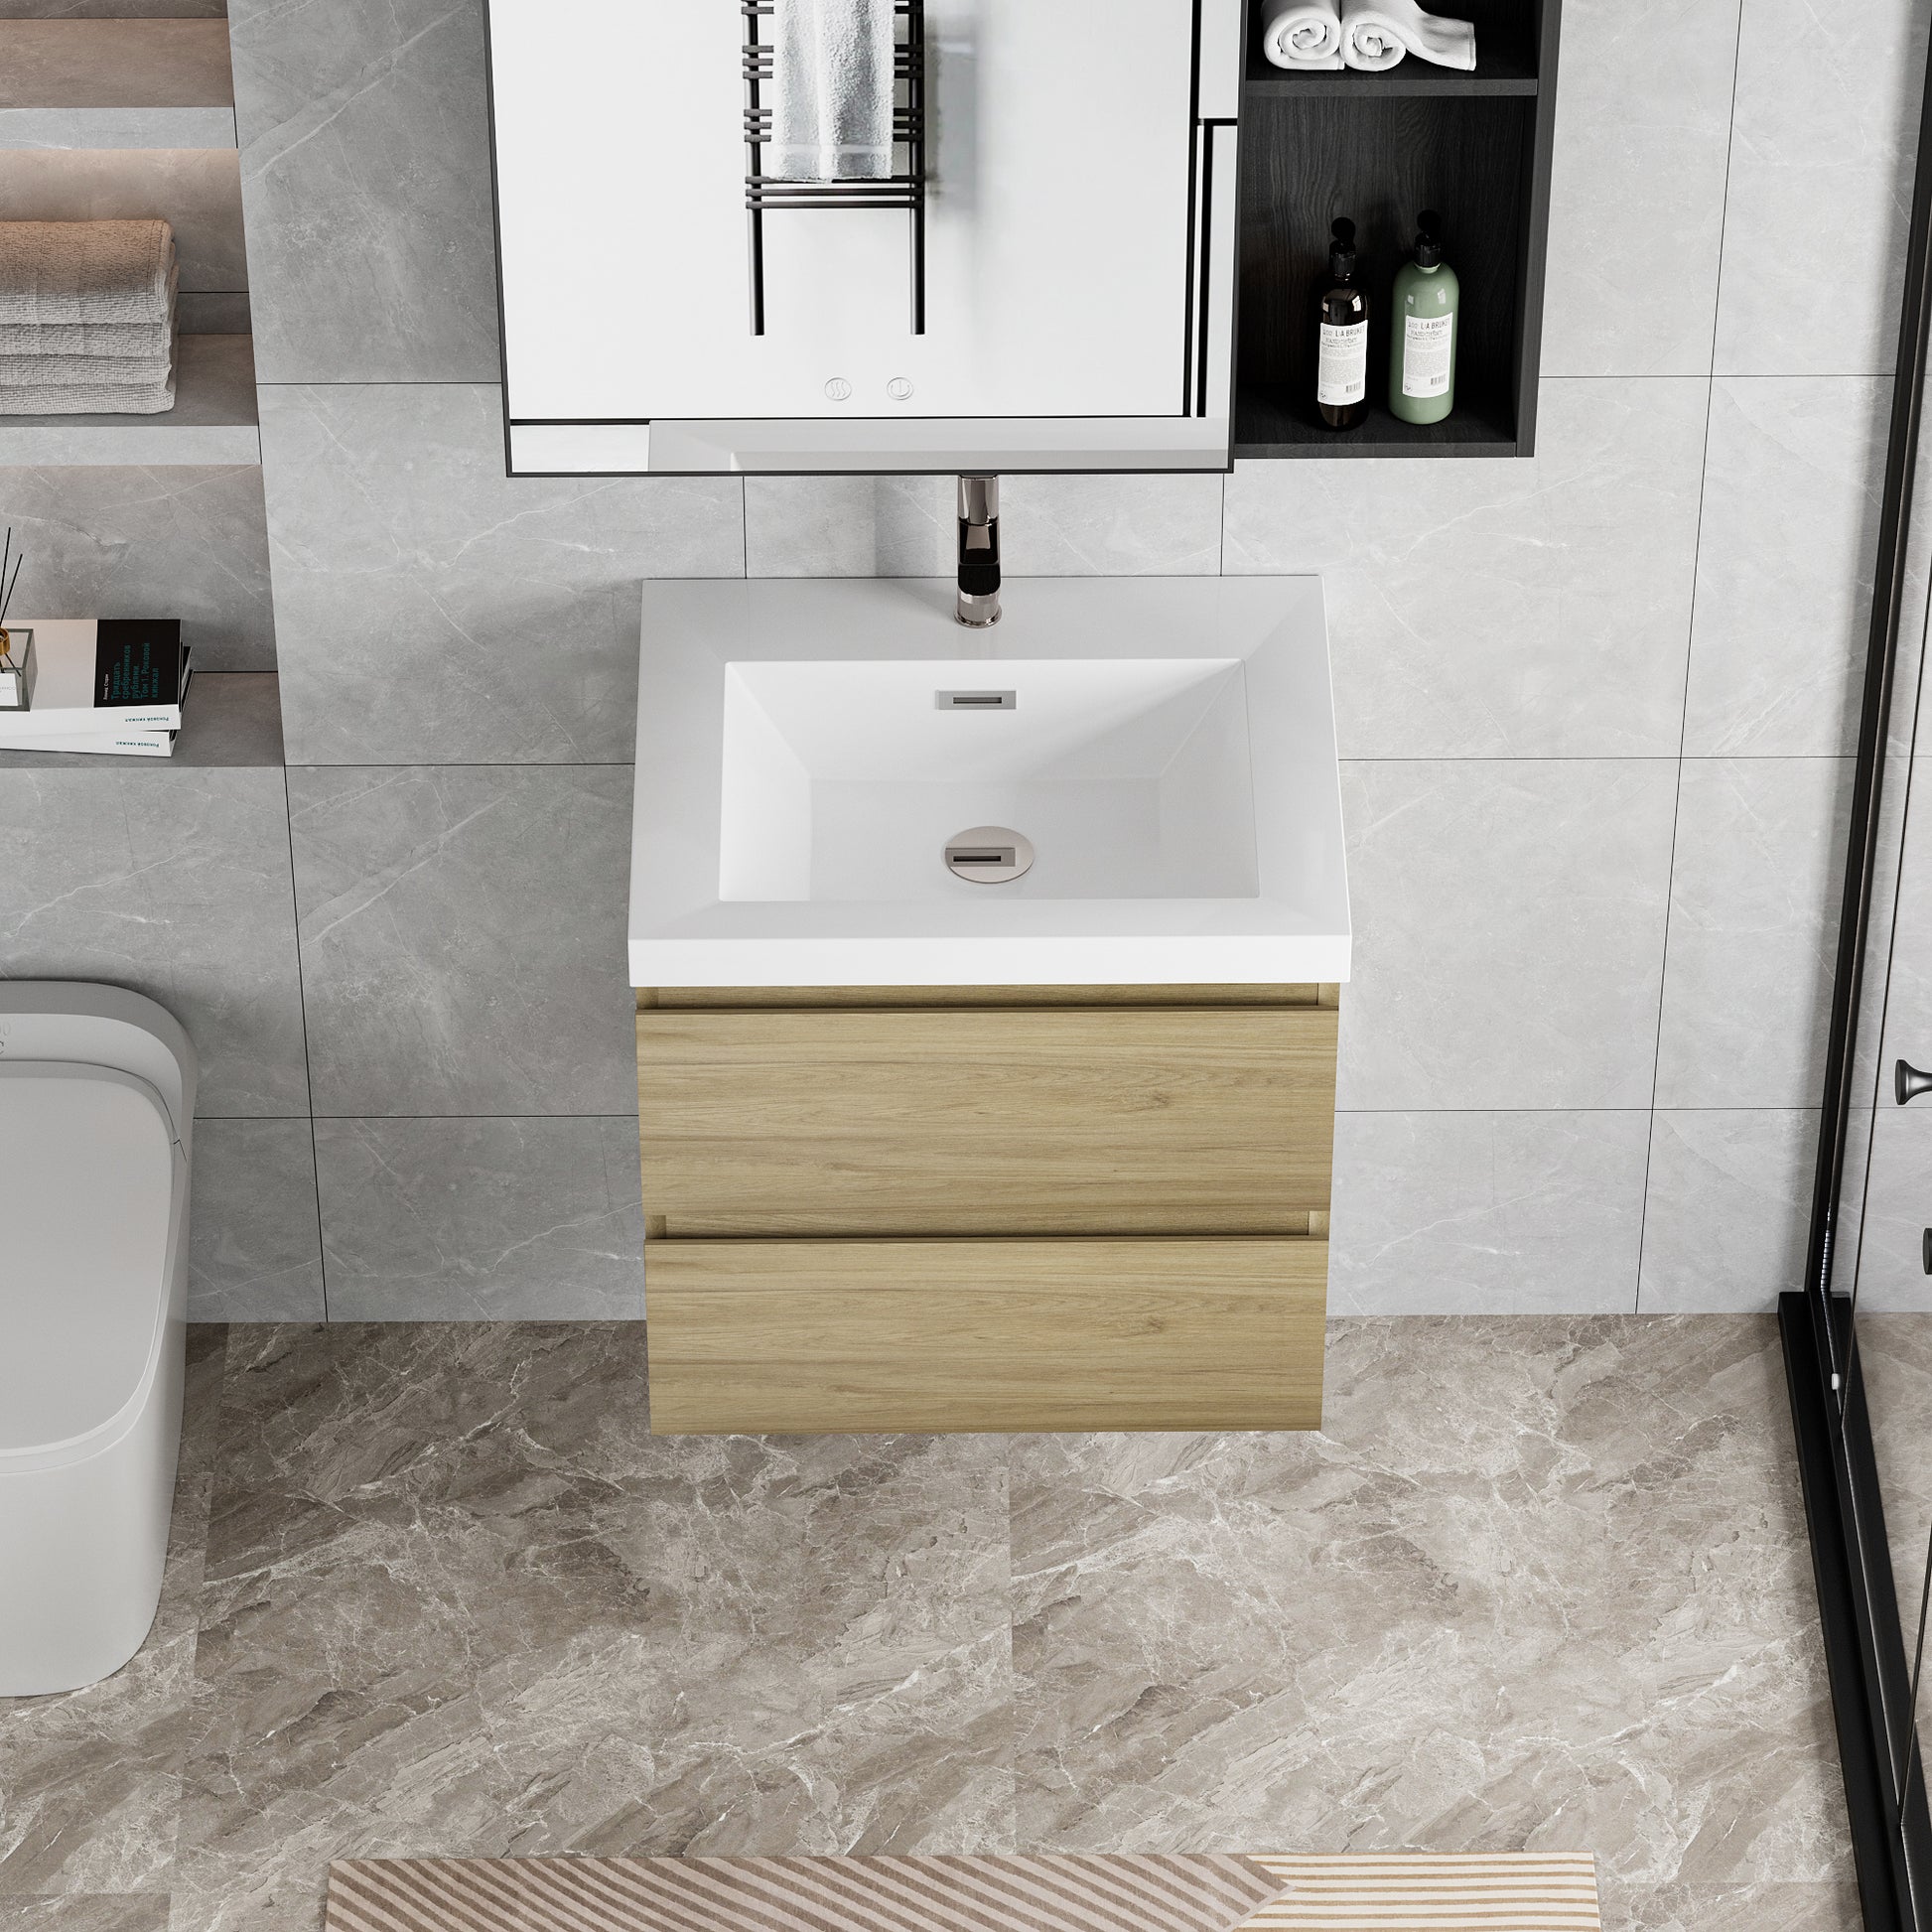 30" Floating Bathroom Vanity with Sink, Modern Wall 2-oak-bathroom-wall mounted-melamine